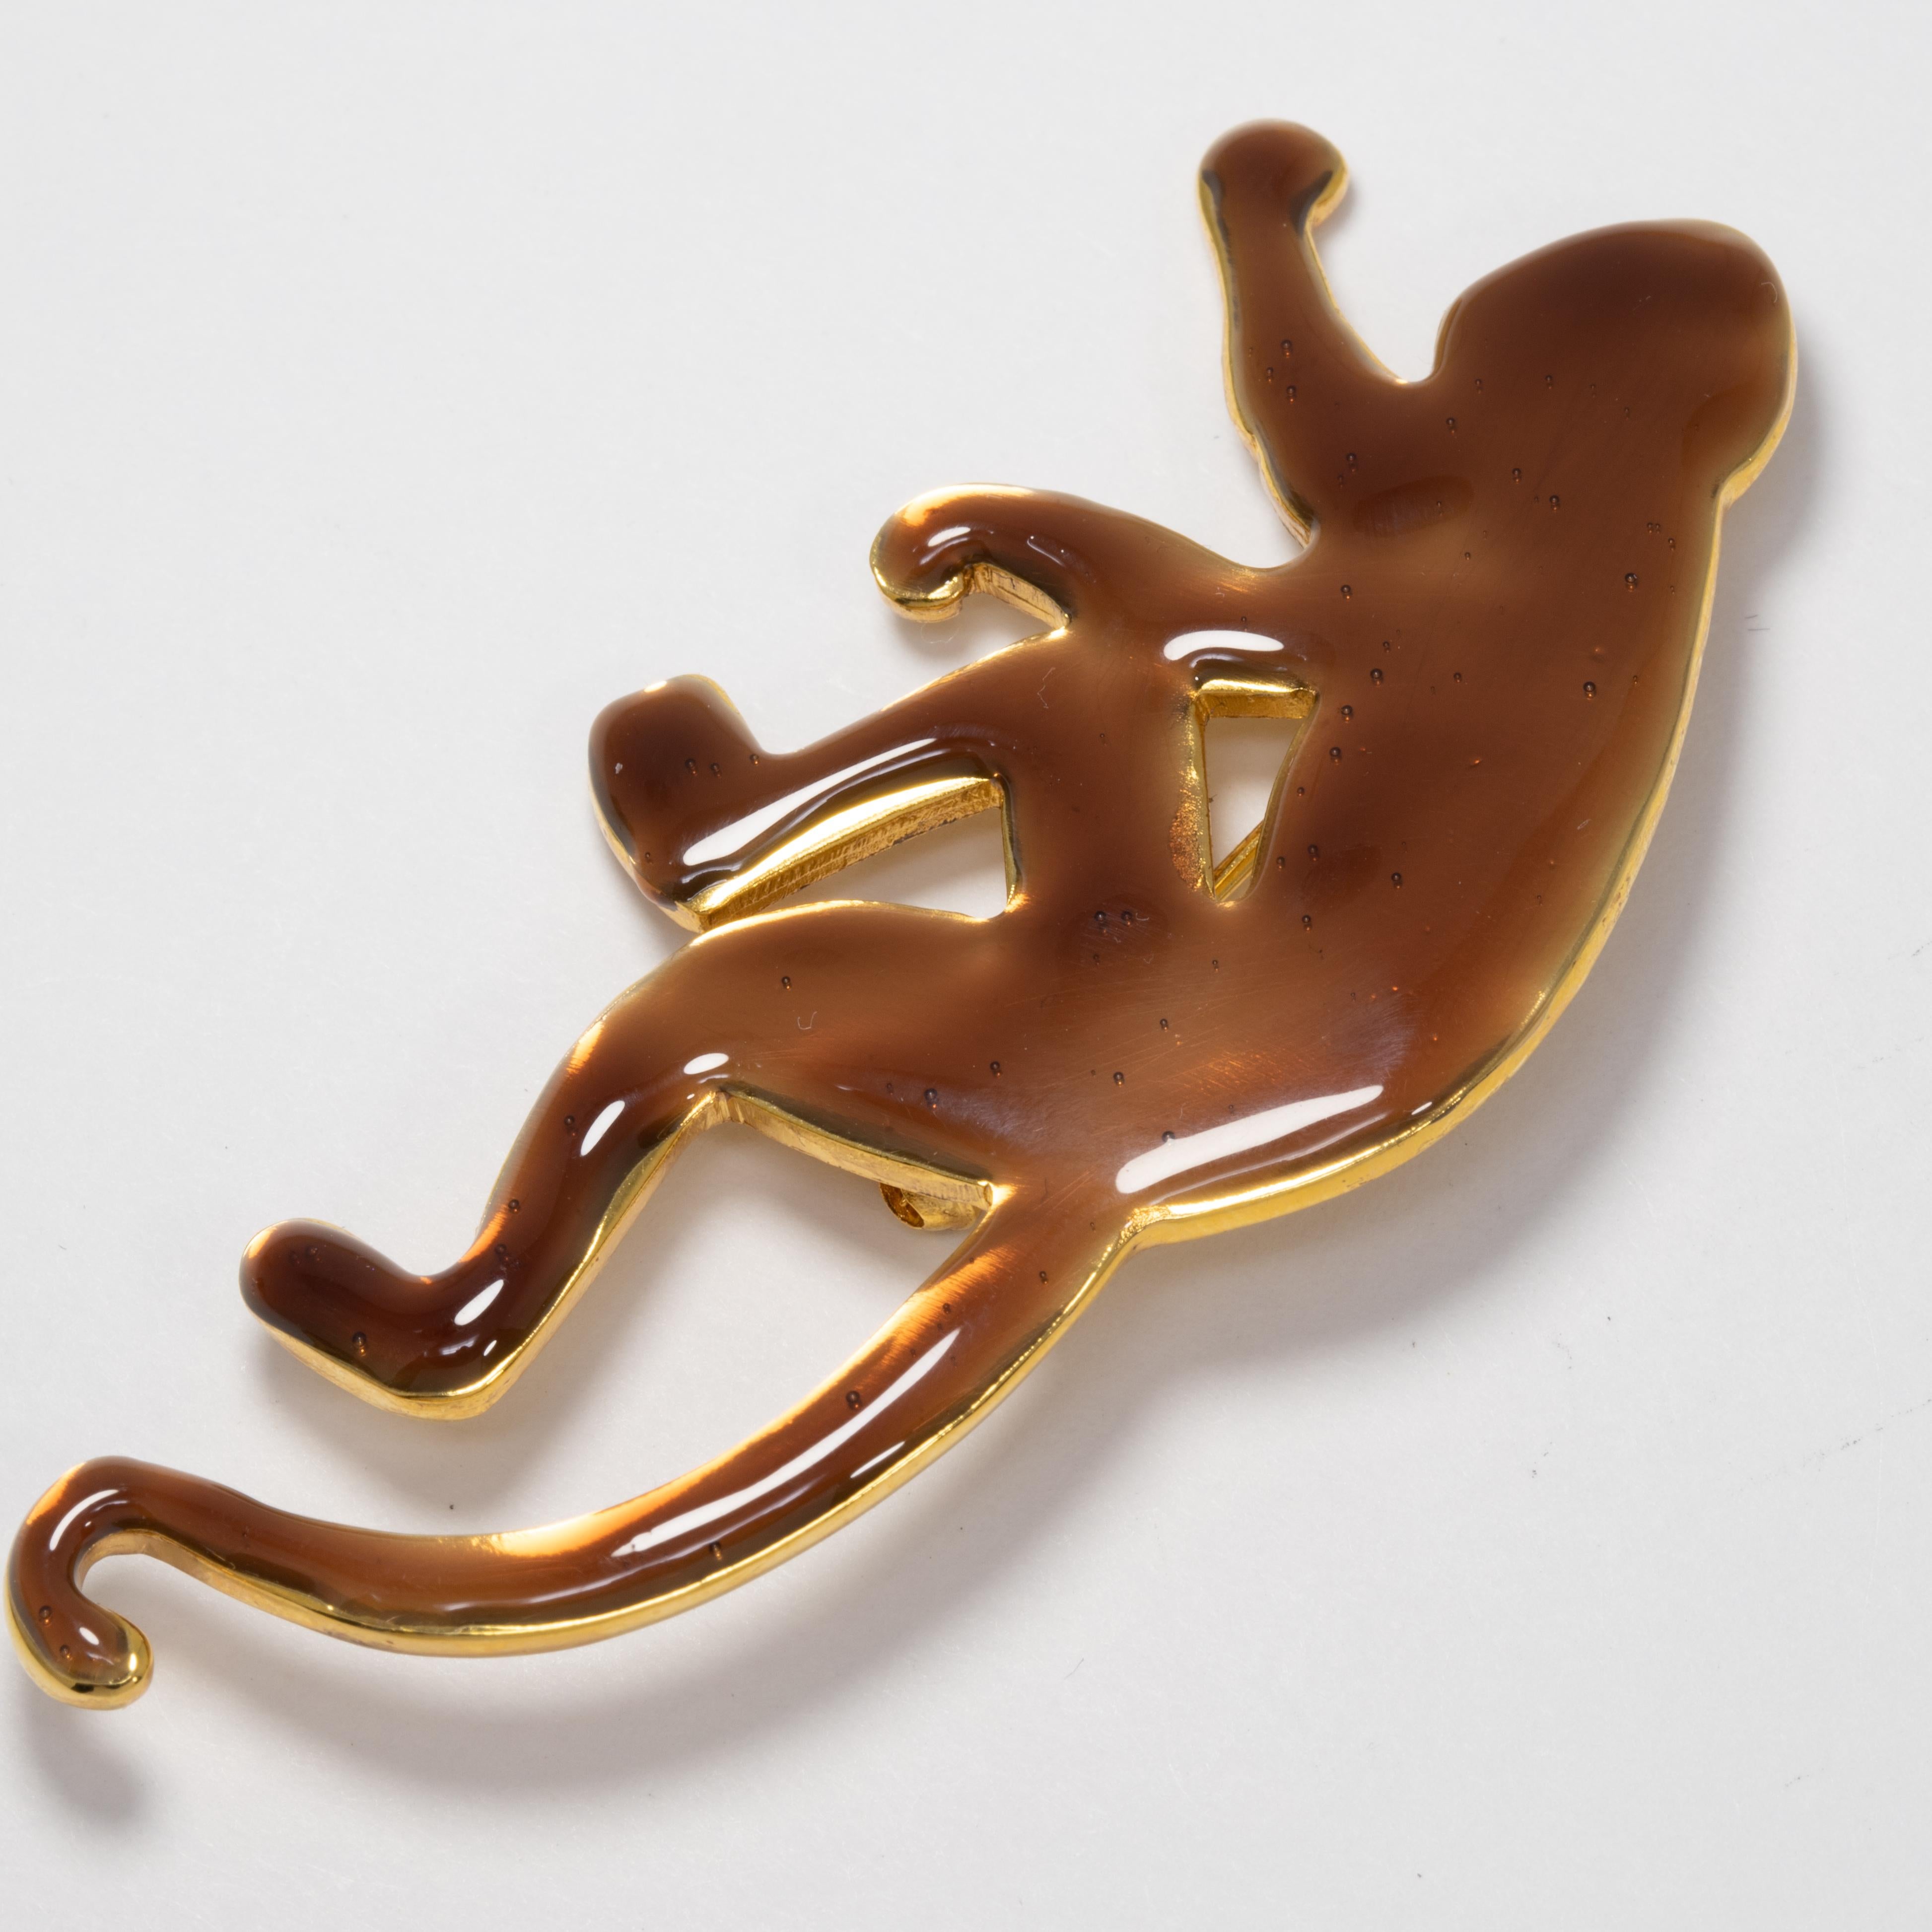 A stylish brooch by Oscar de la Renta. Features a gold-plated monkey outline painted with opaque caramel-brown enamel.

Hallmarks: Oscar de la Renta, Made in USA